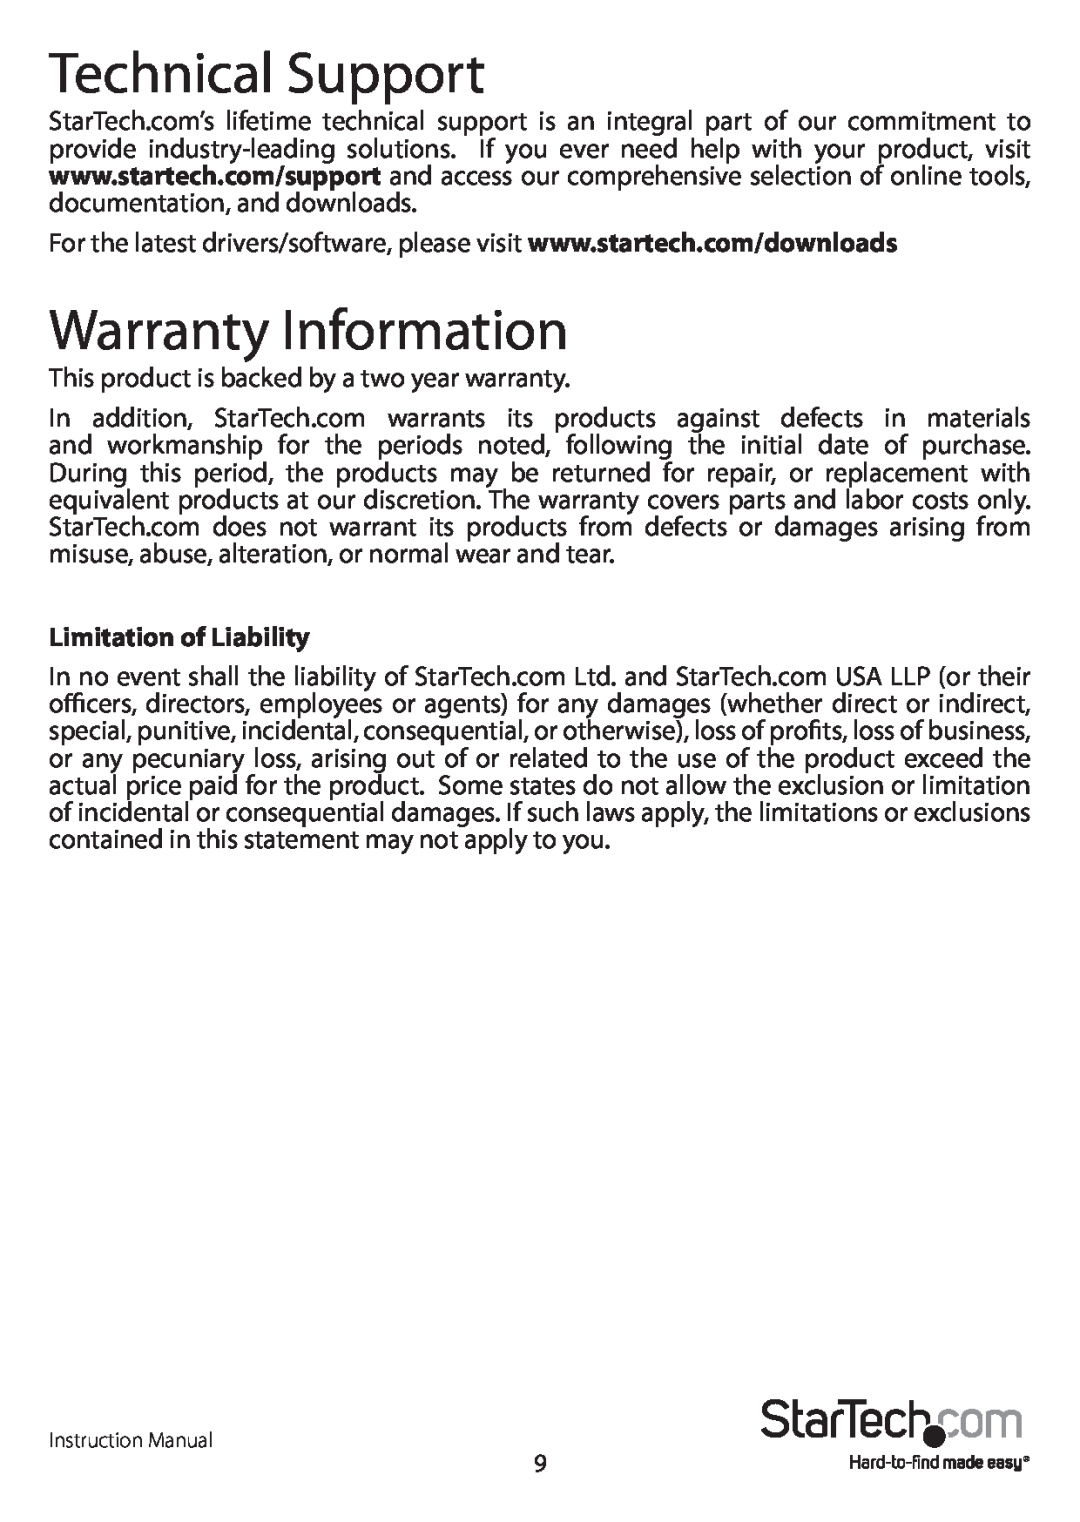 StarTech.com S2510BMU33 manual Technical Support, Warranty Information, Limitation of Liability 